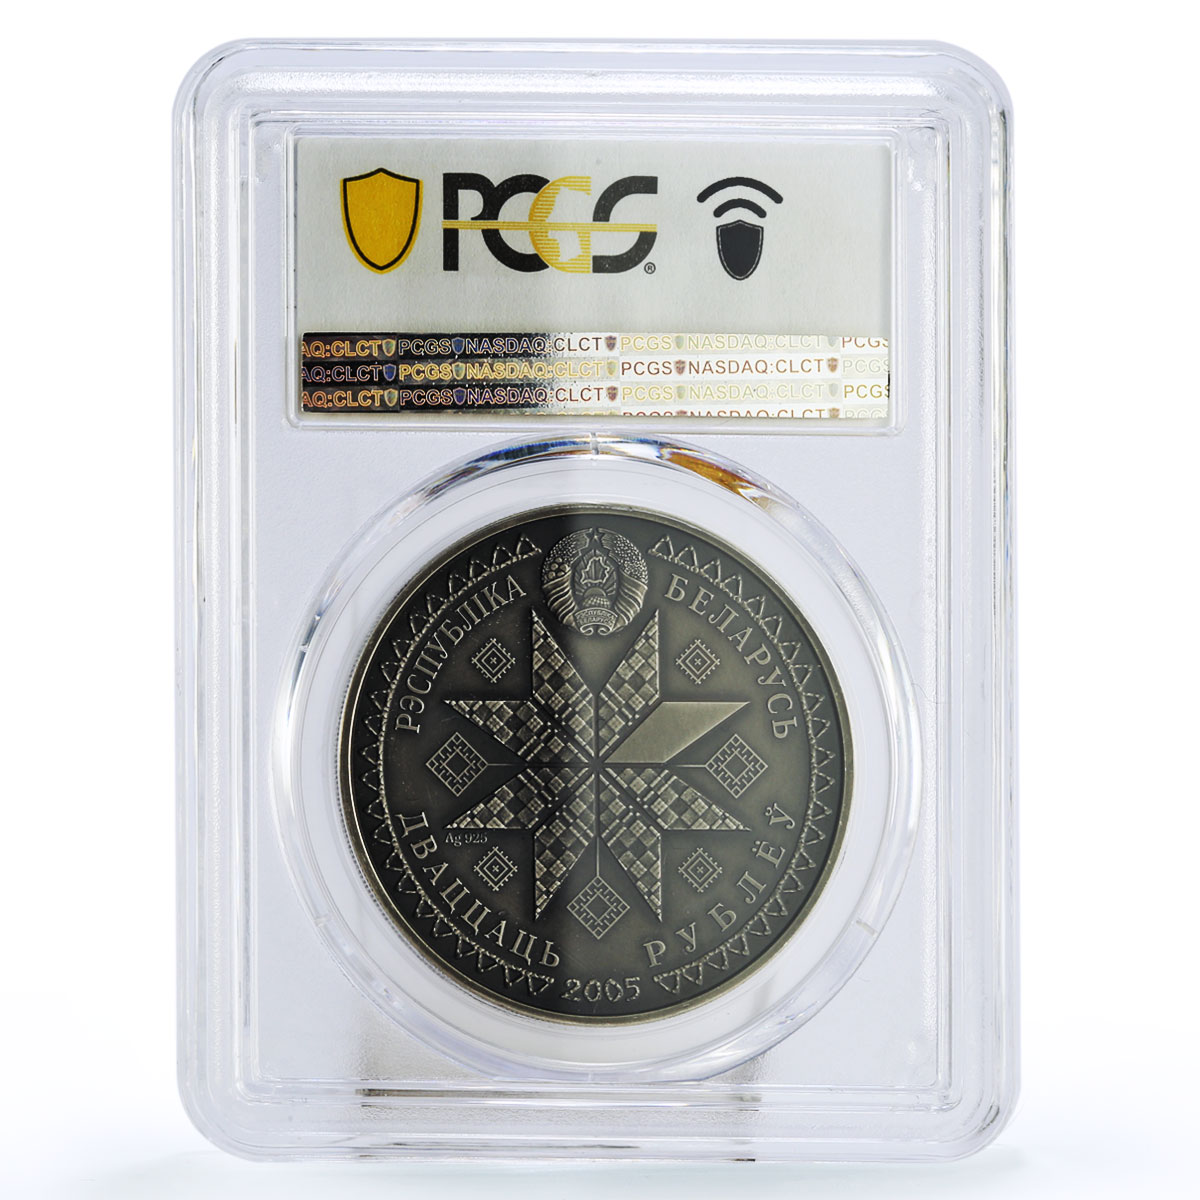 Belarus 20 rubles Velikdzen Easter Egg MS69 PCGS silver coin 2005